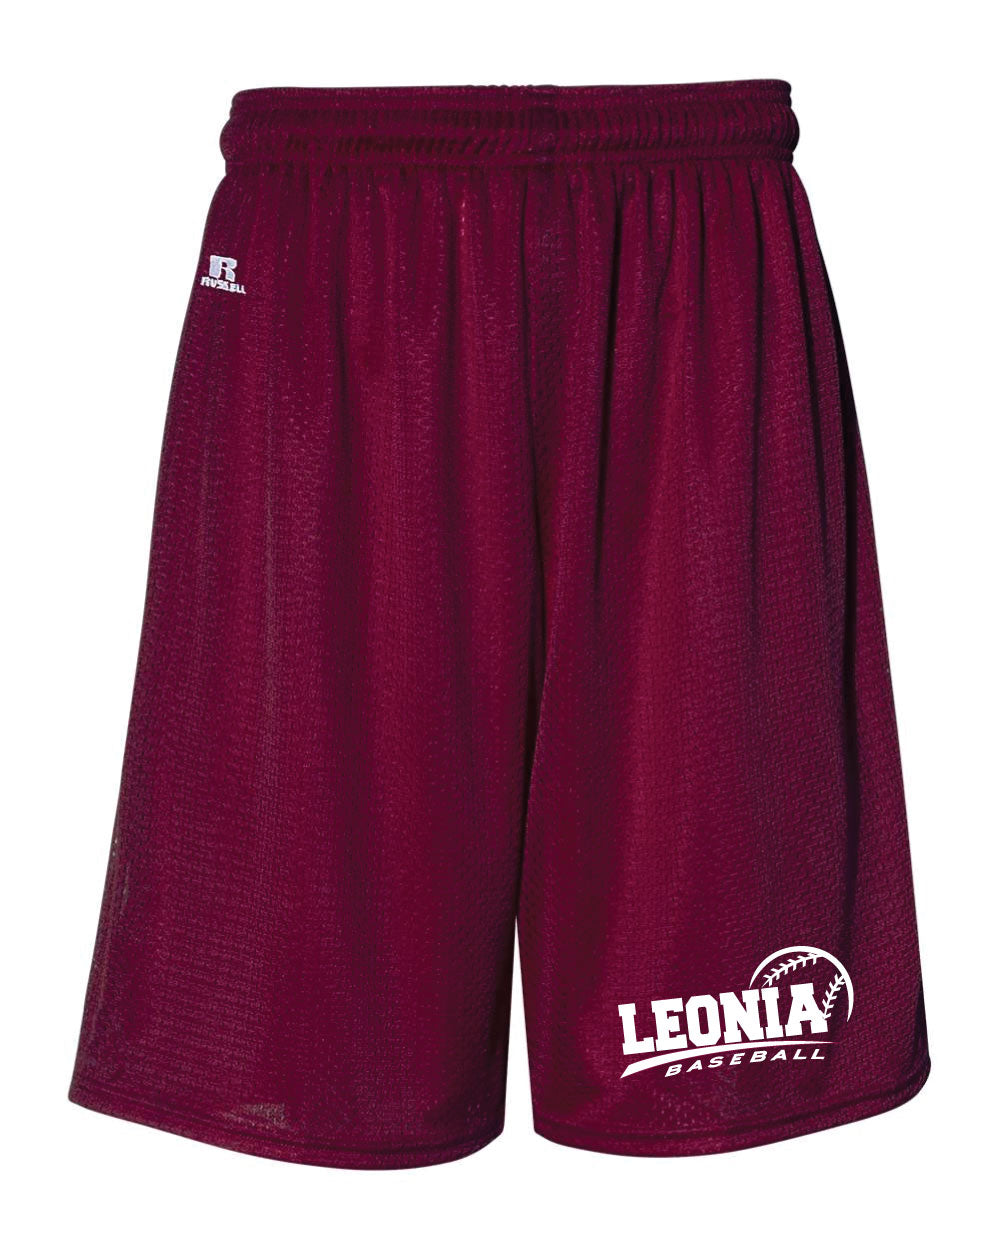 Leonia Baseball Russell Athletic Tech Shorts - Maroon - 5KounT2018